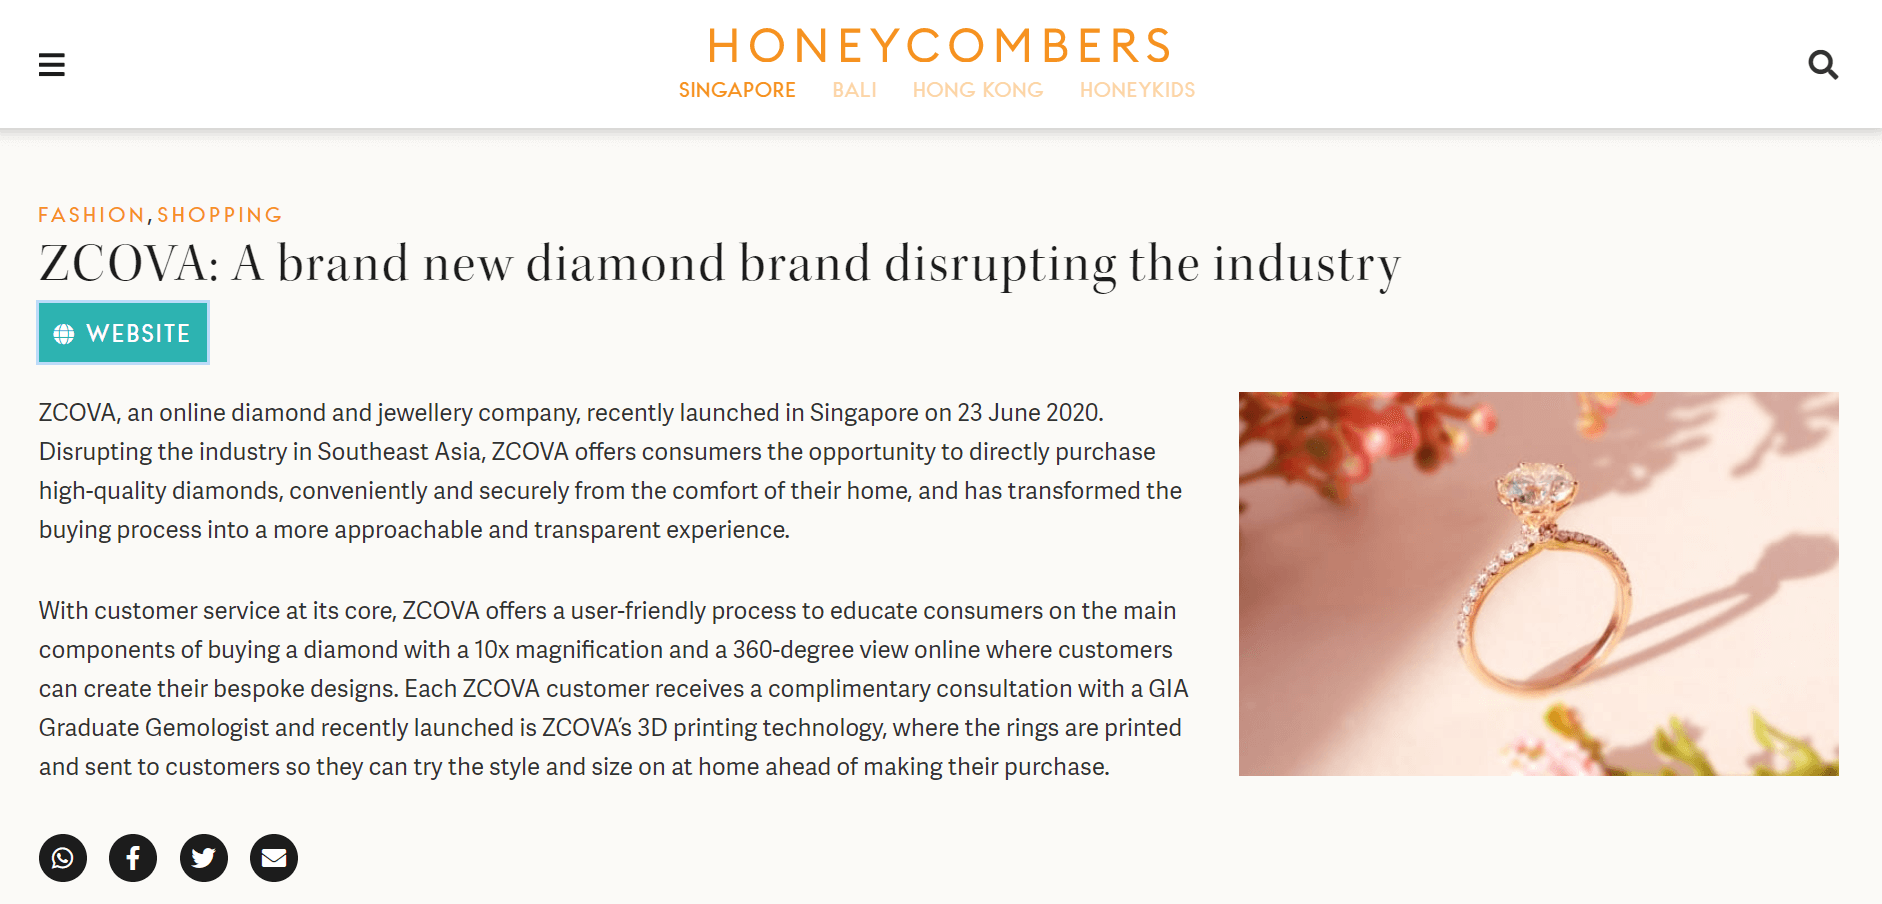 Zcova in Honeycomber - purchasing diamonds online in Singapore